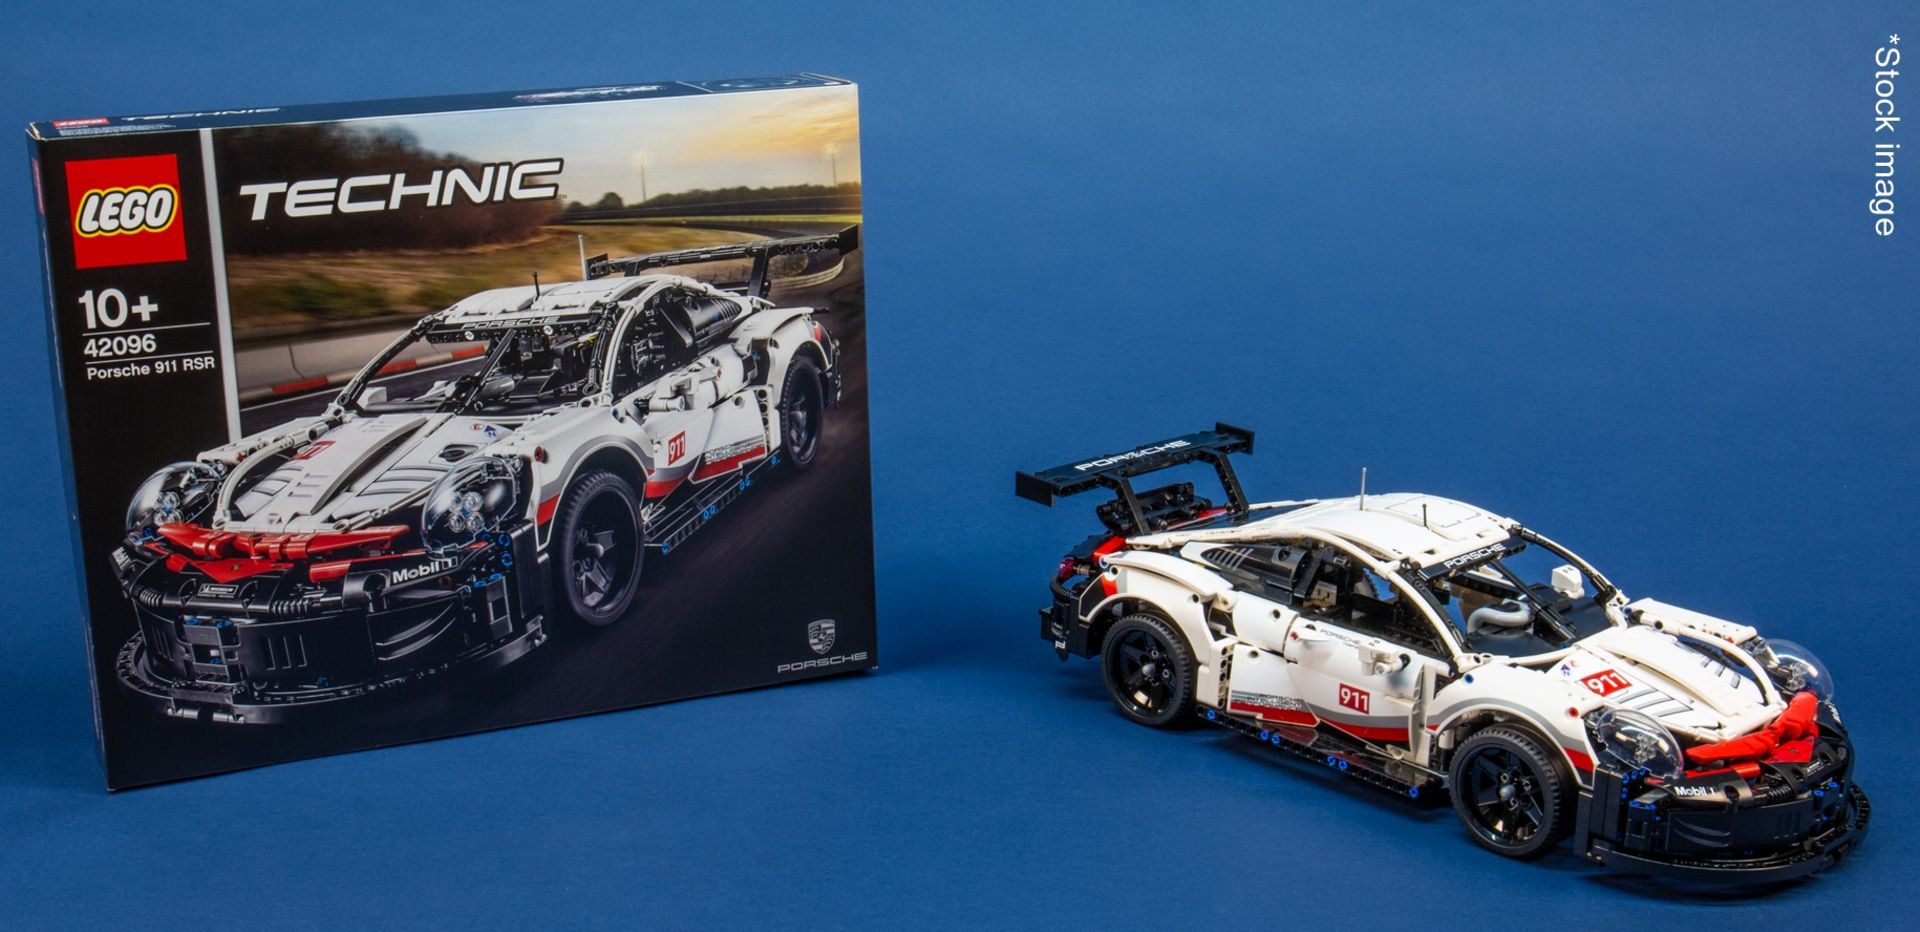 1 x LEGO Technic Porsche 911 RSR Sports Car Set - Original Price £169.99